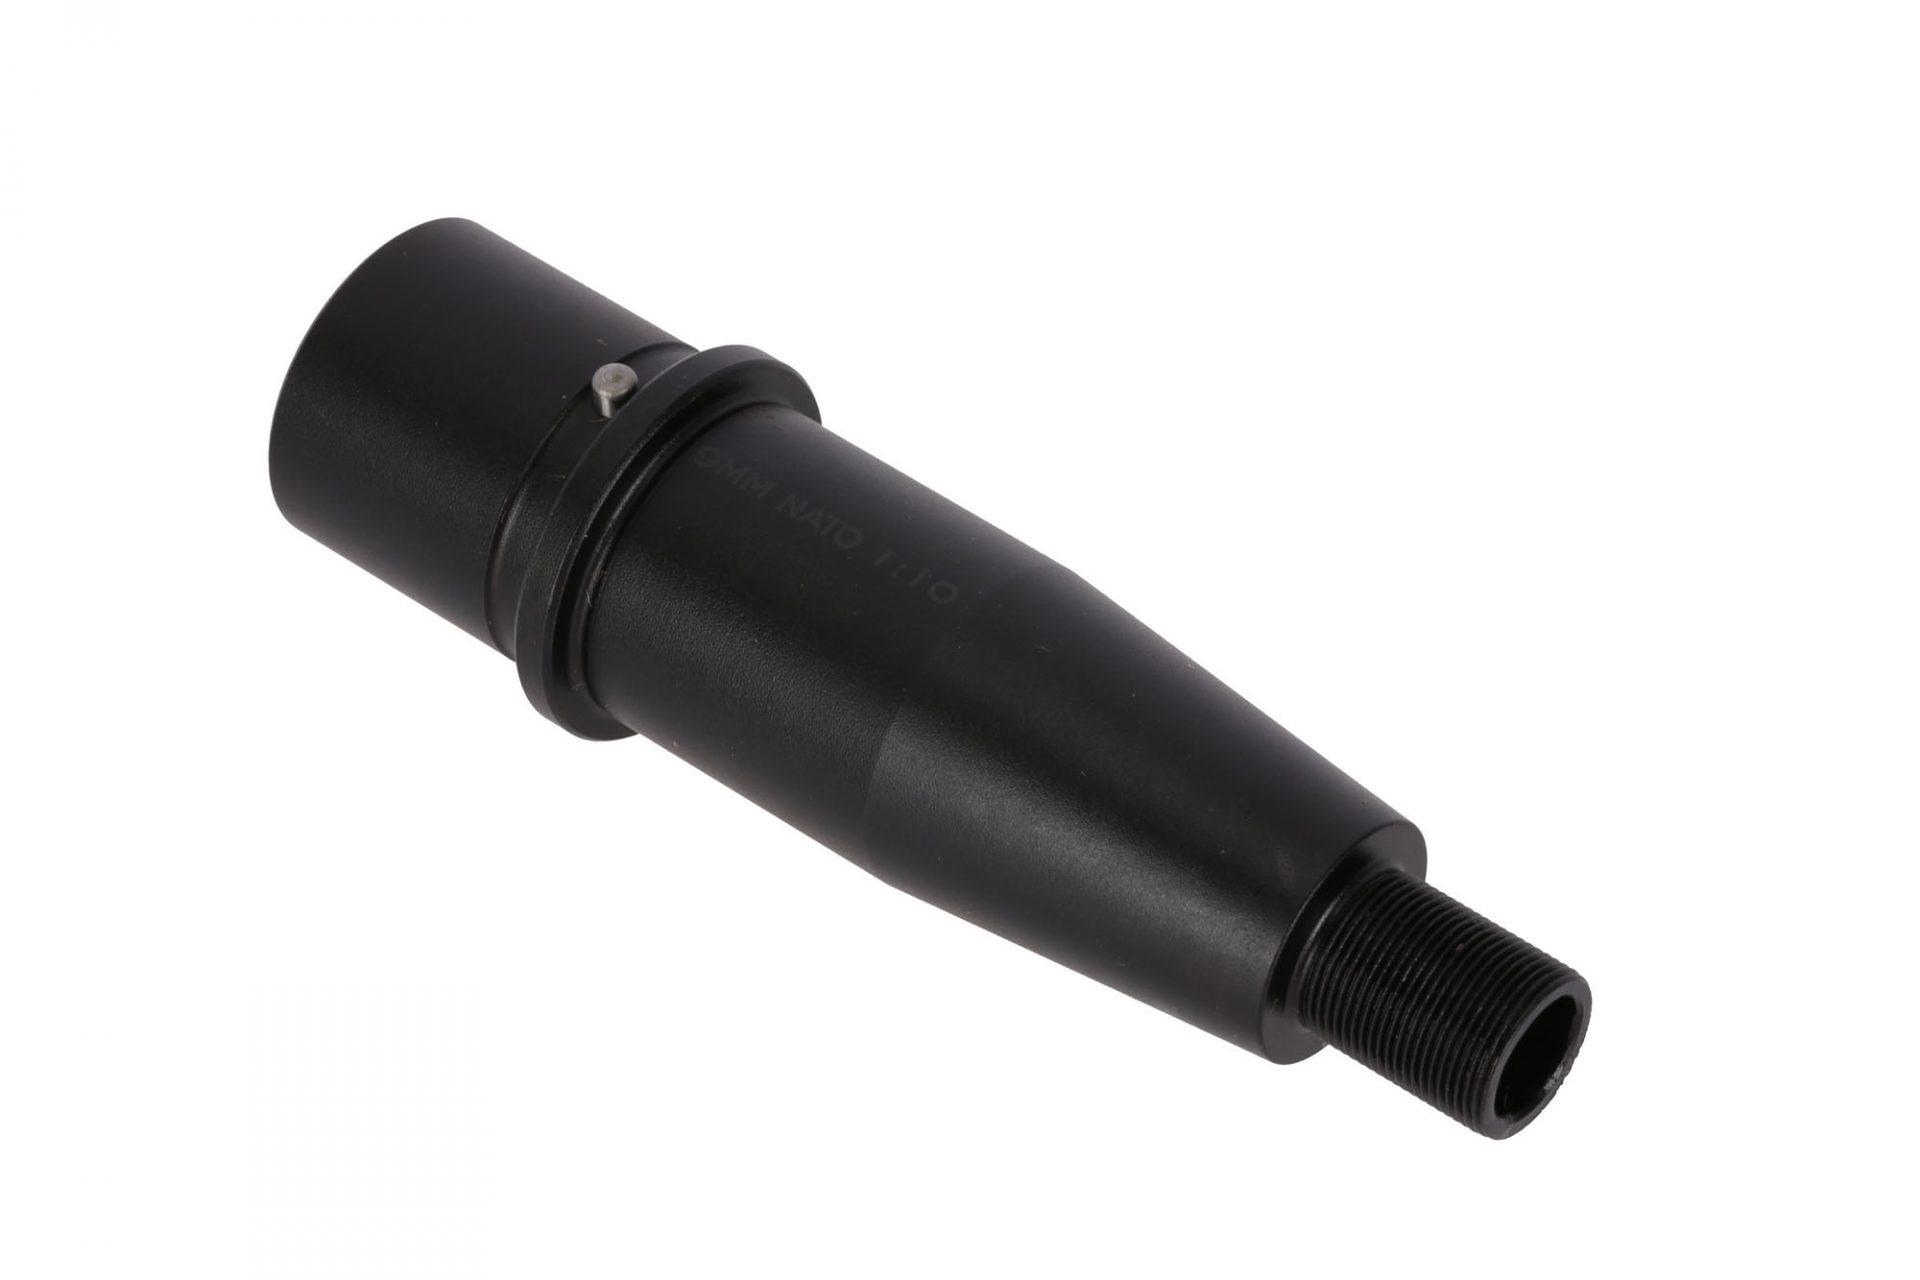 NBS 4" 9mm Medium Profile QPQ Nitride Barrel - $69.95 (Free S/H over $150)